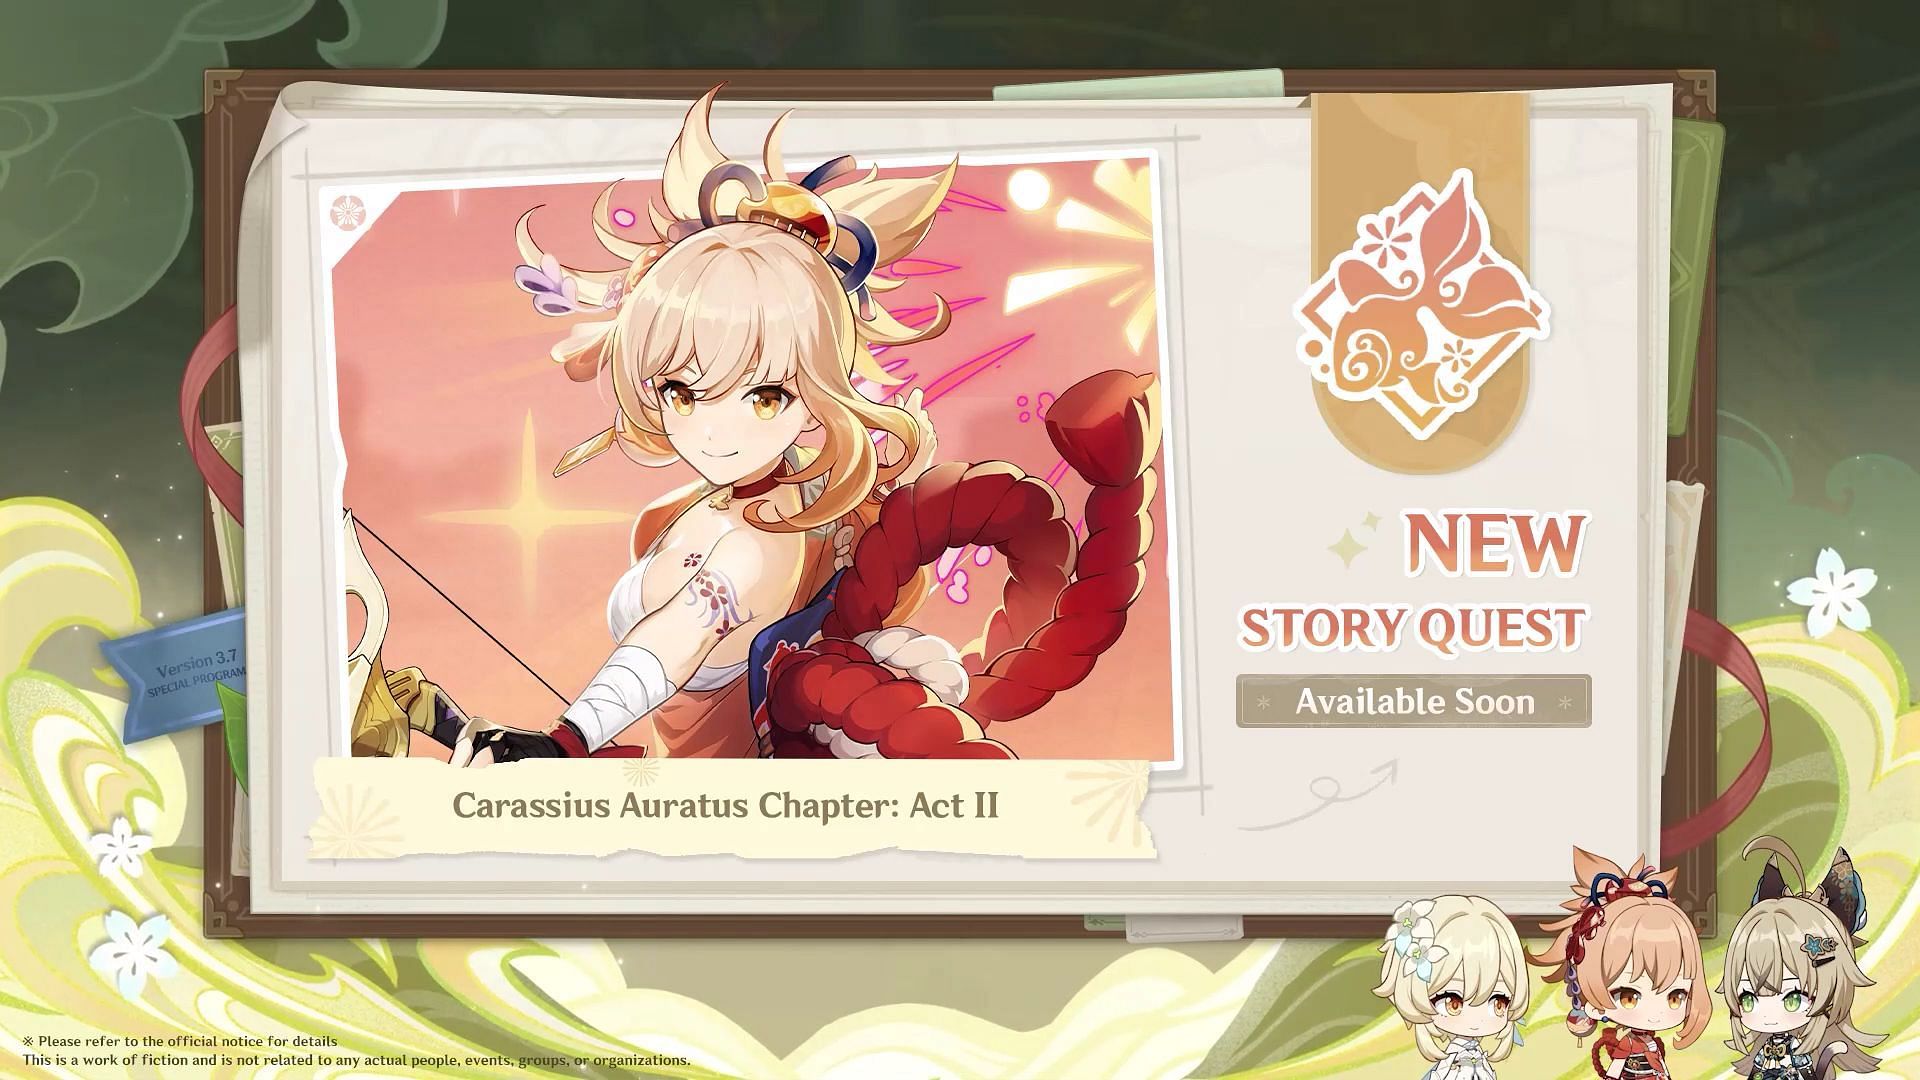 Yoimiya is getting a new Story Quest (Image via HoYoverse)